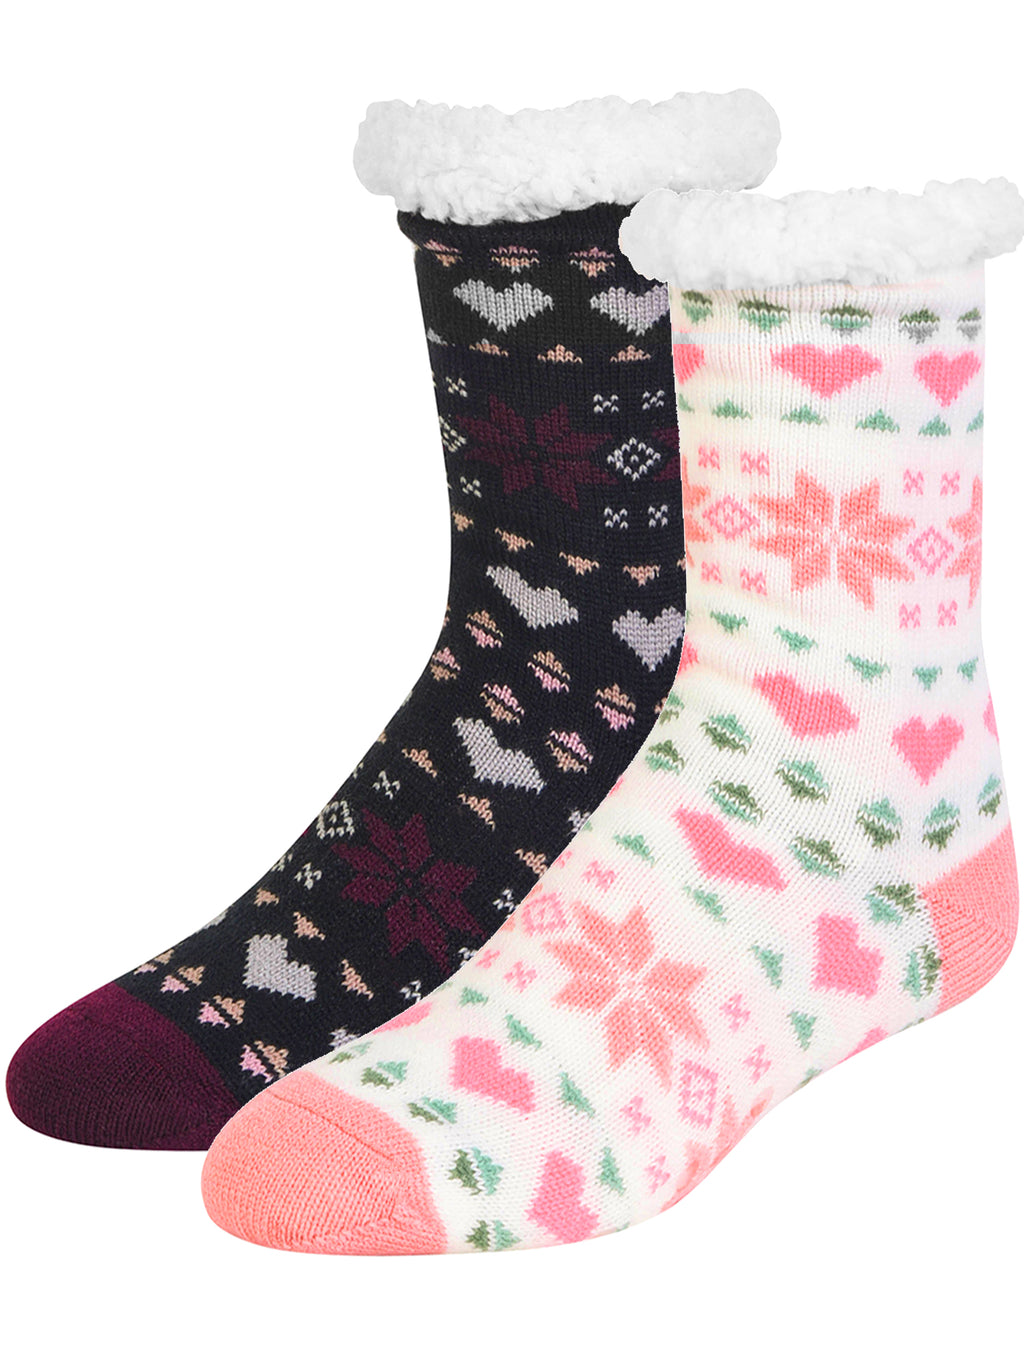 Black & Pink Snowflake 2-Pack Slipper Socks